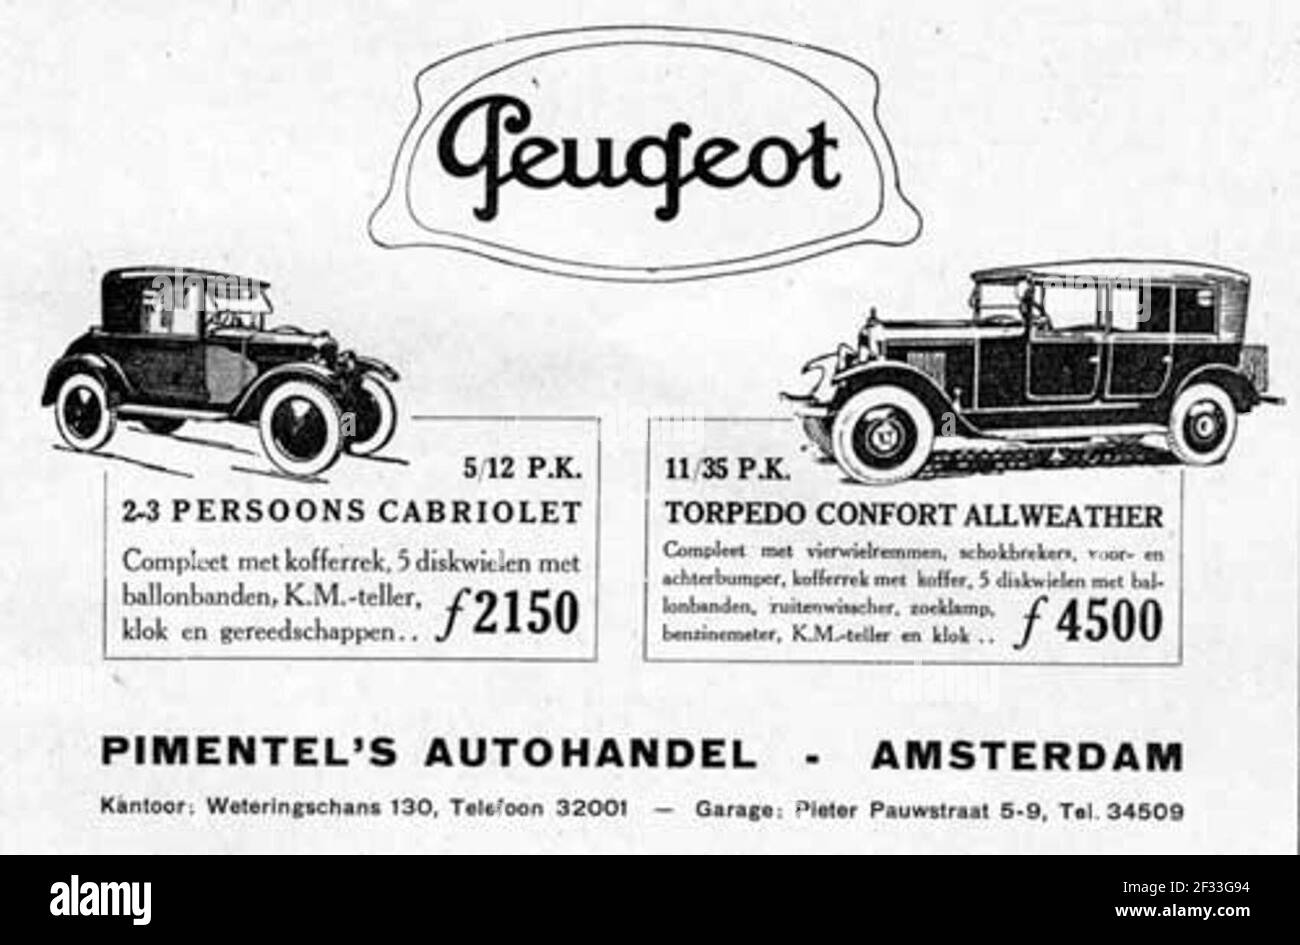 Peugeot (F) - Pimentel's Autohandel, Amsterdam advertentie november 1926 Stock Photo